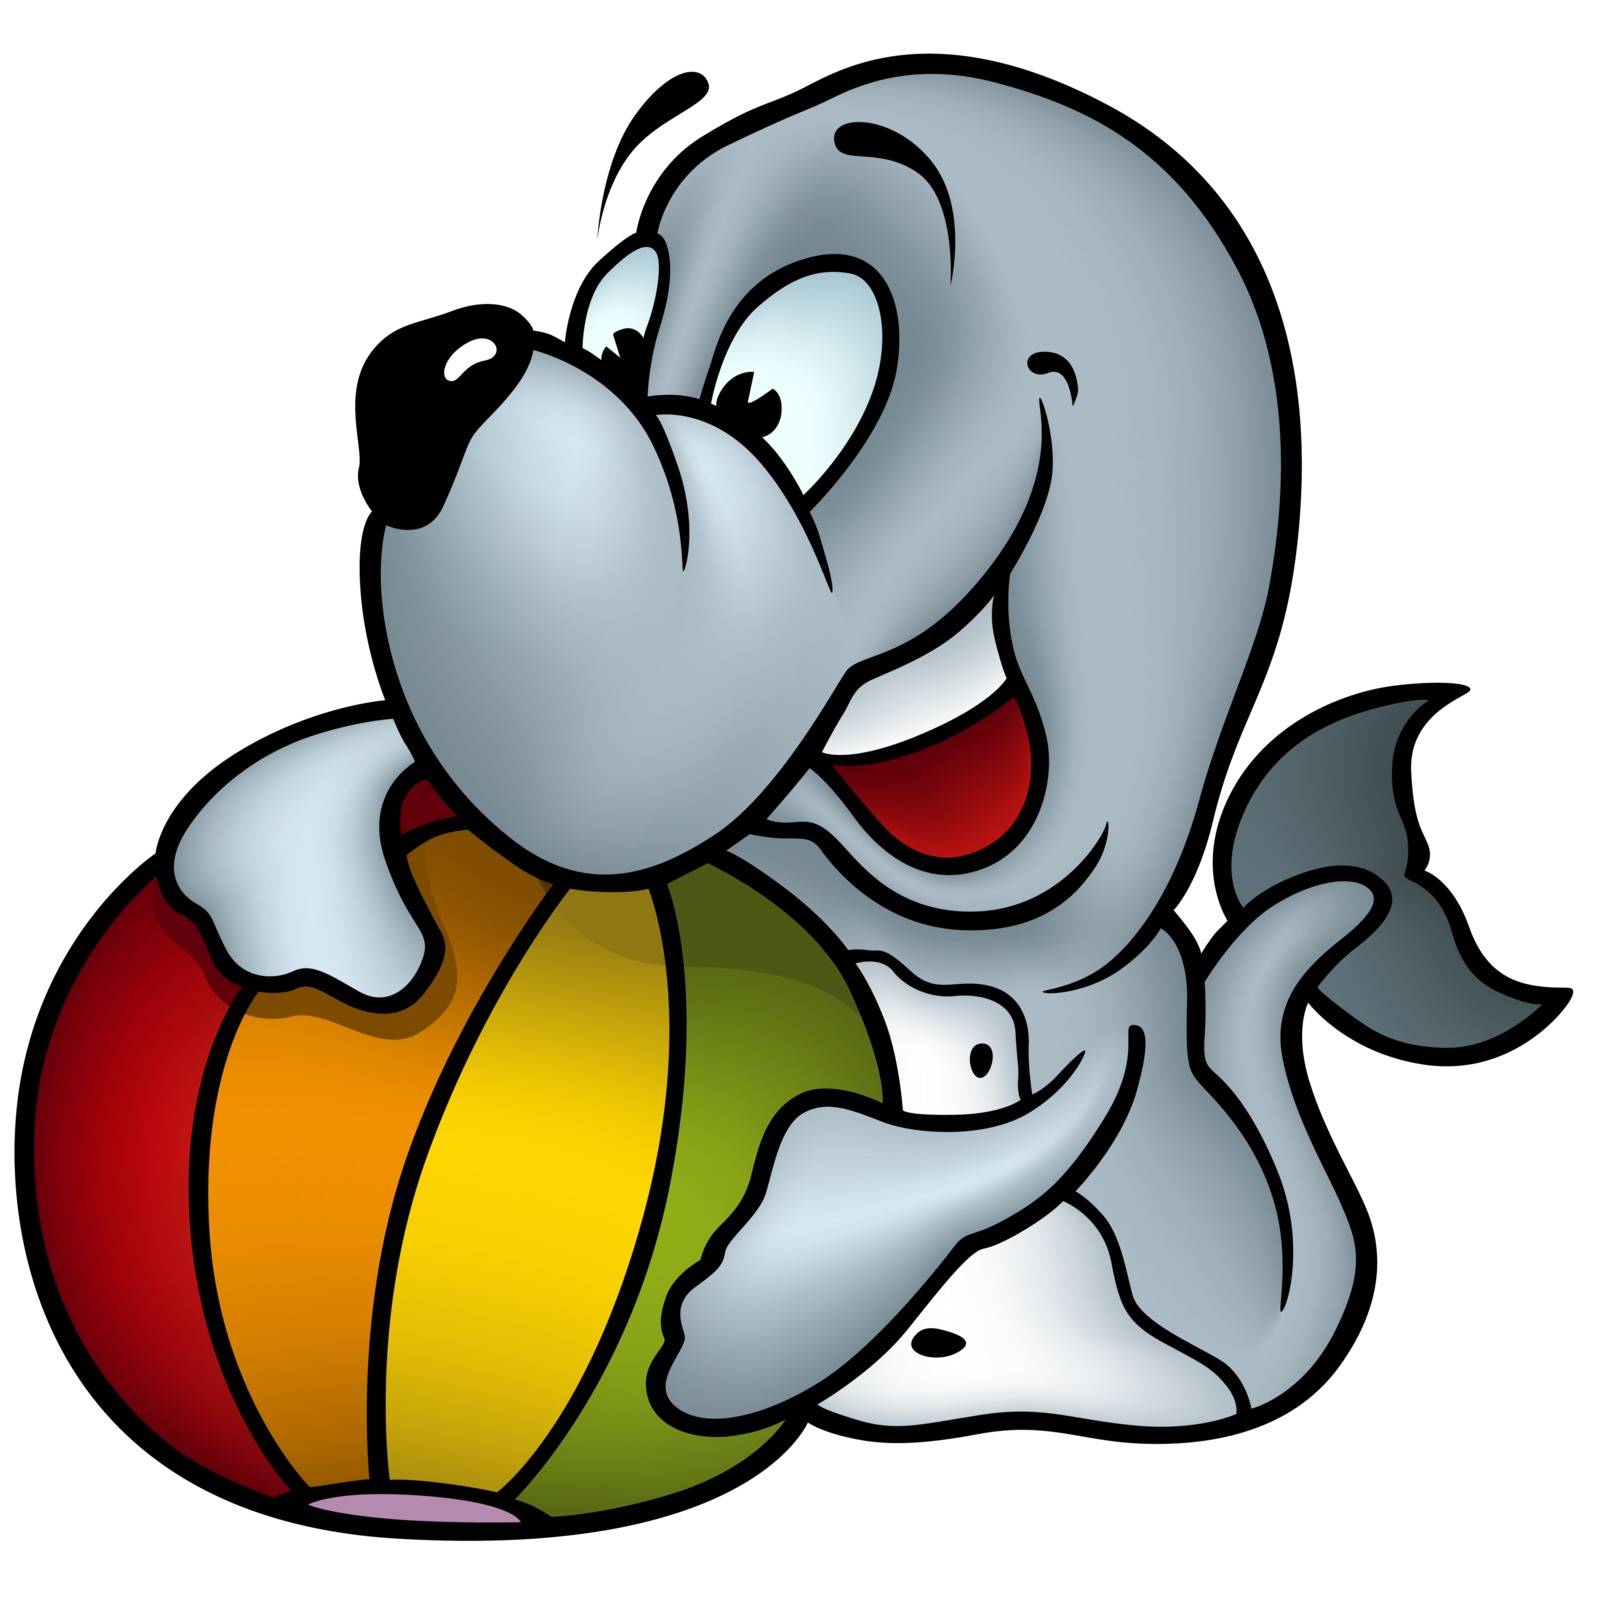 Seal And Beach Ball - Colored Cartoon Illustration, Vector